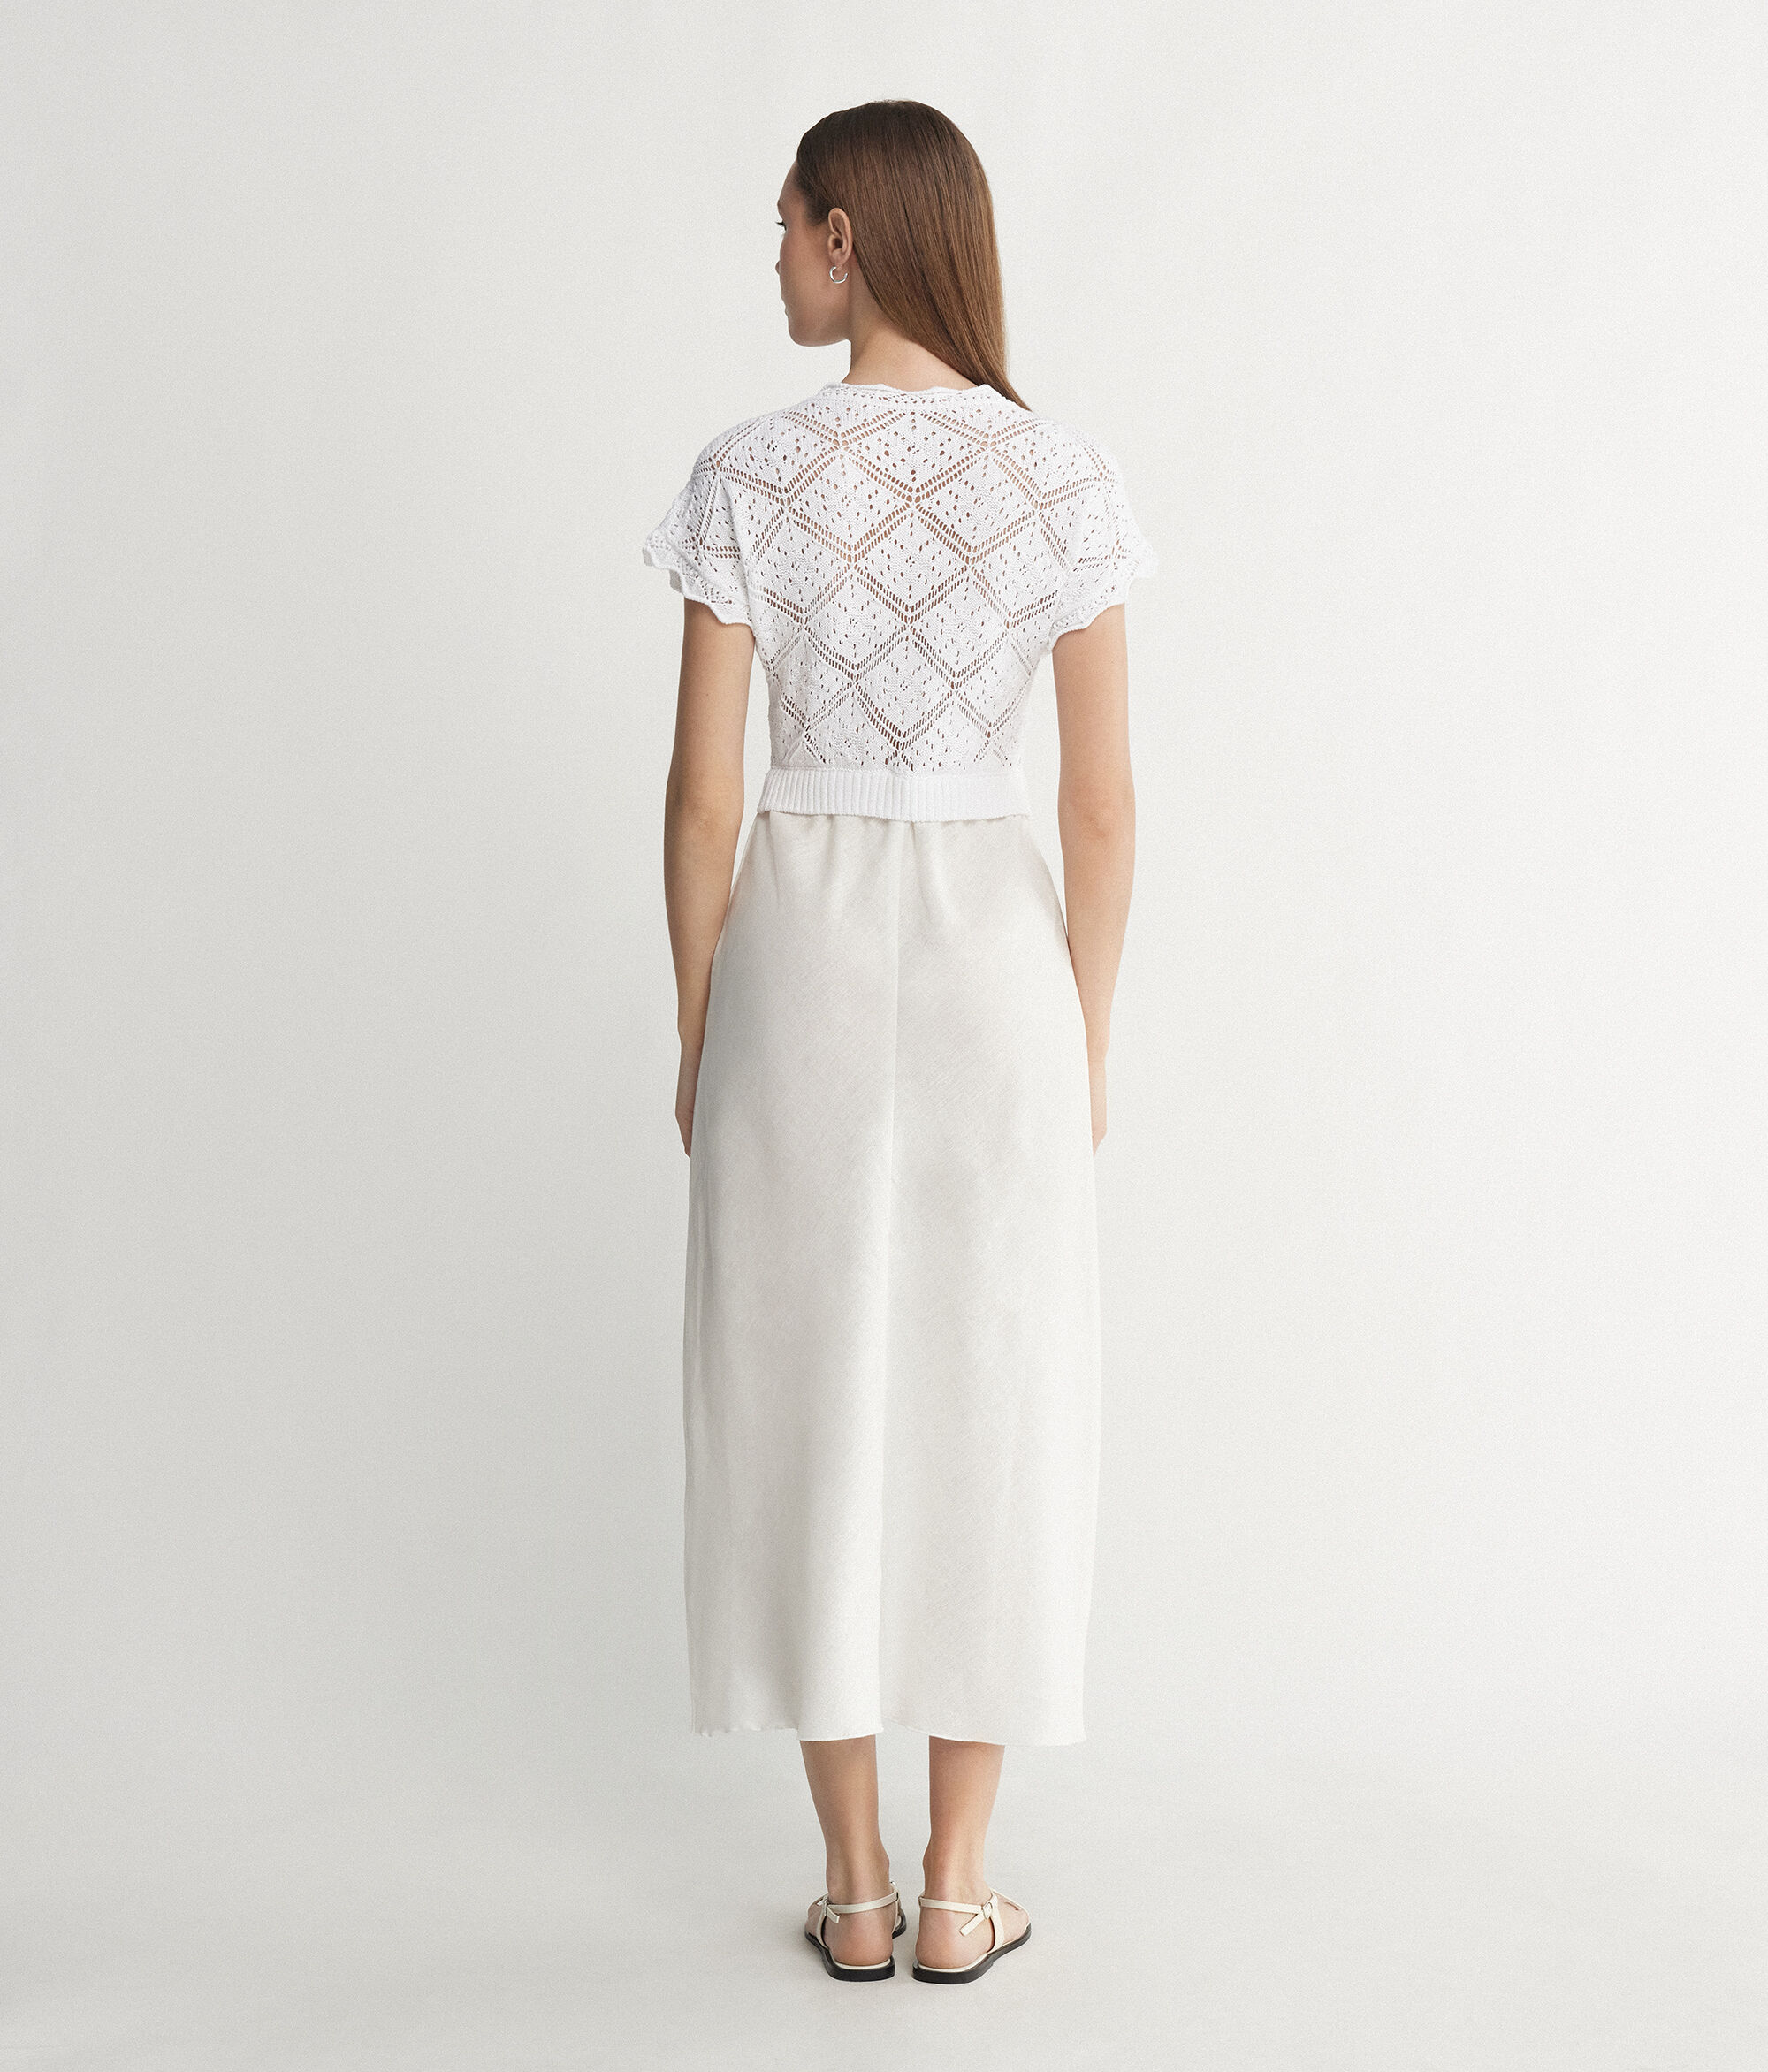 Diamond Stitch dress with linen skirt